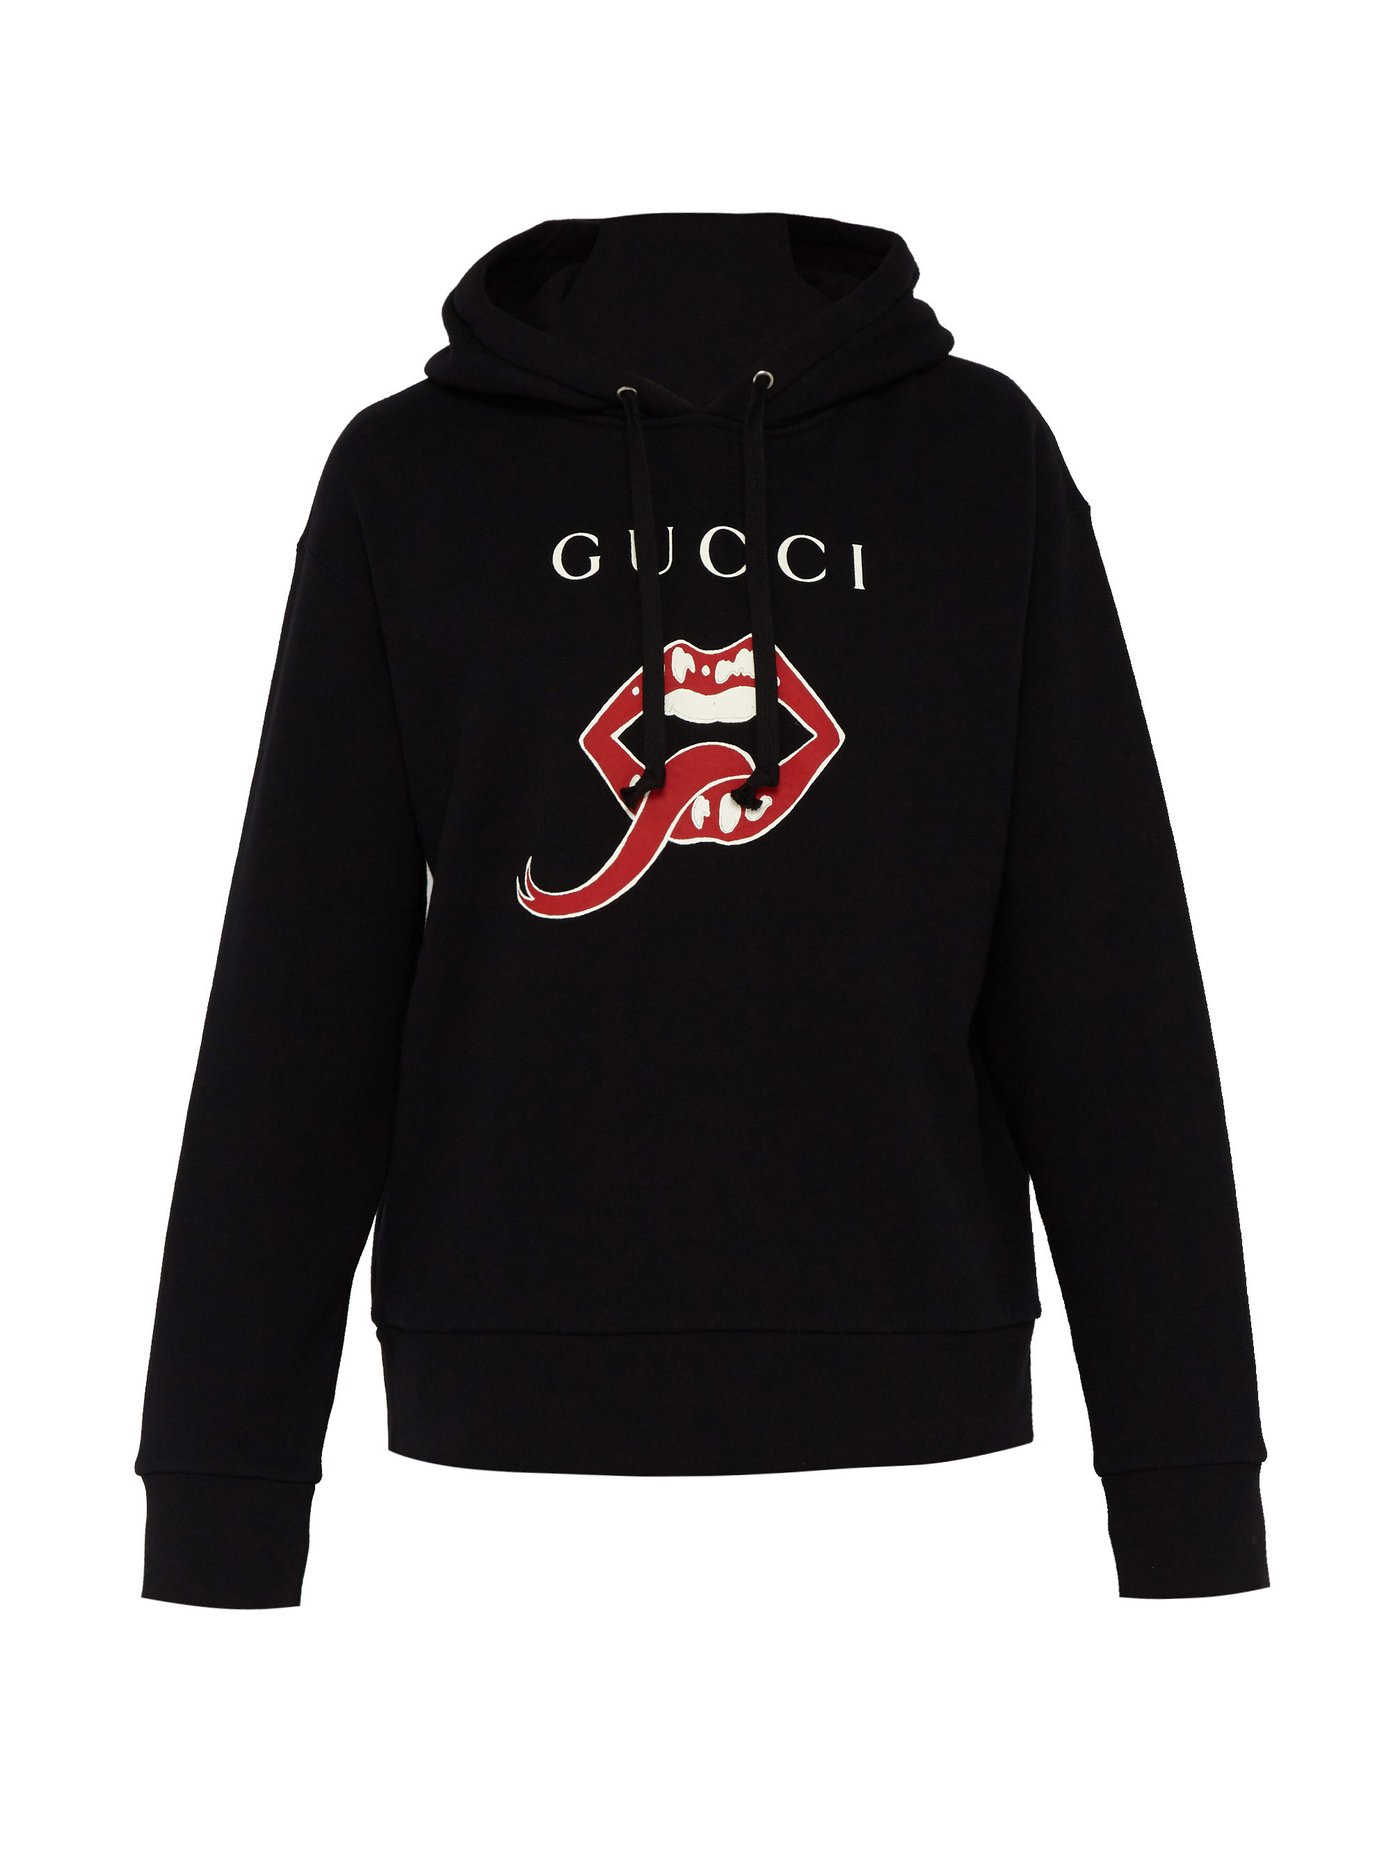 Gucci Mouth Print T Shirt Deals, 59% OFF | www.ingeniovirtual.com